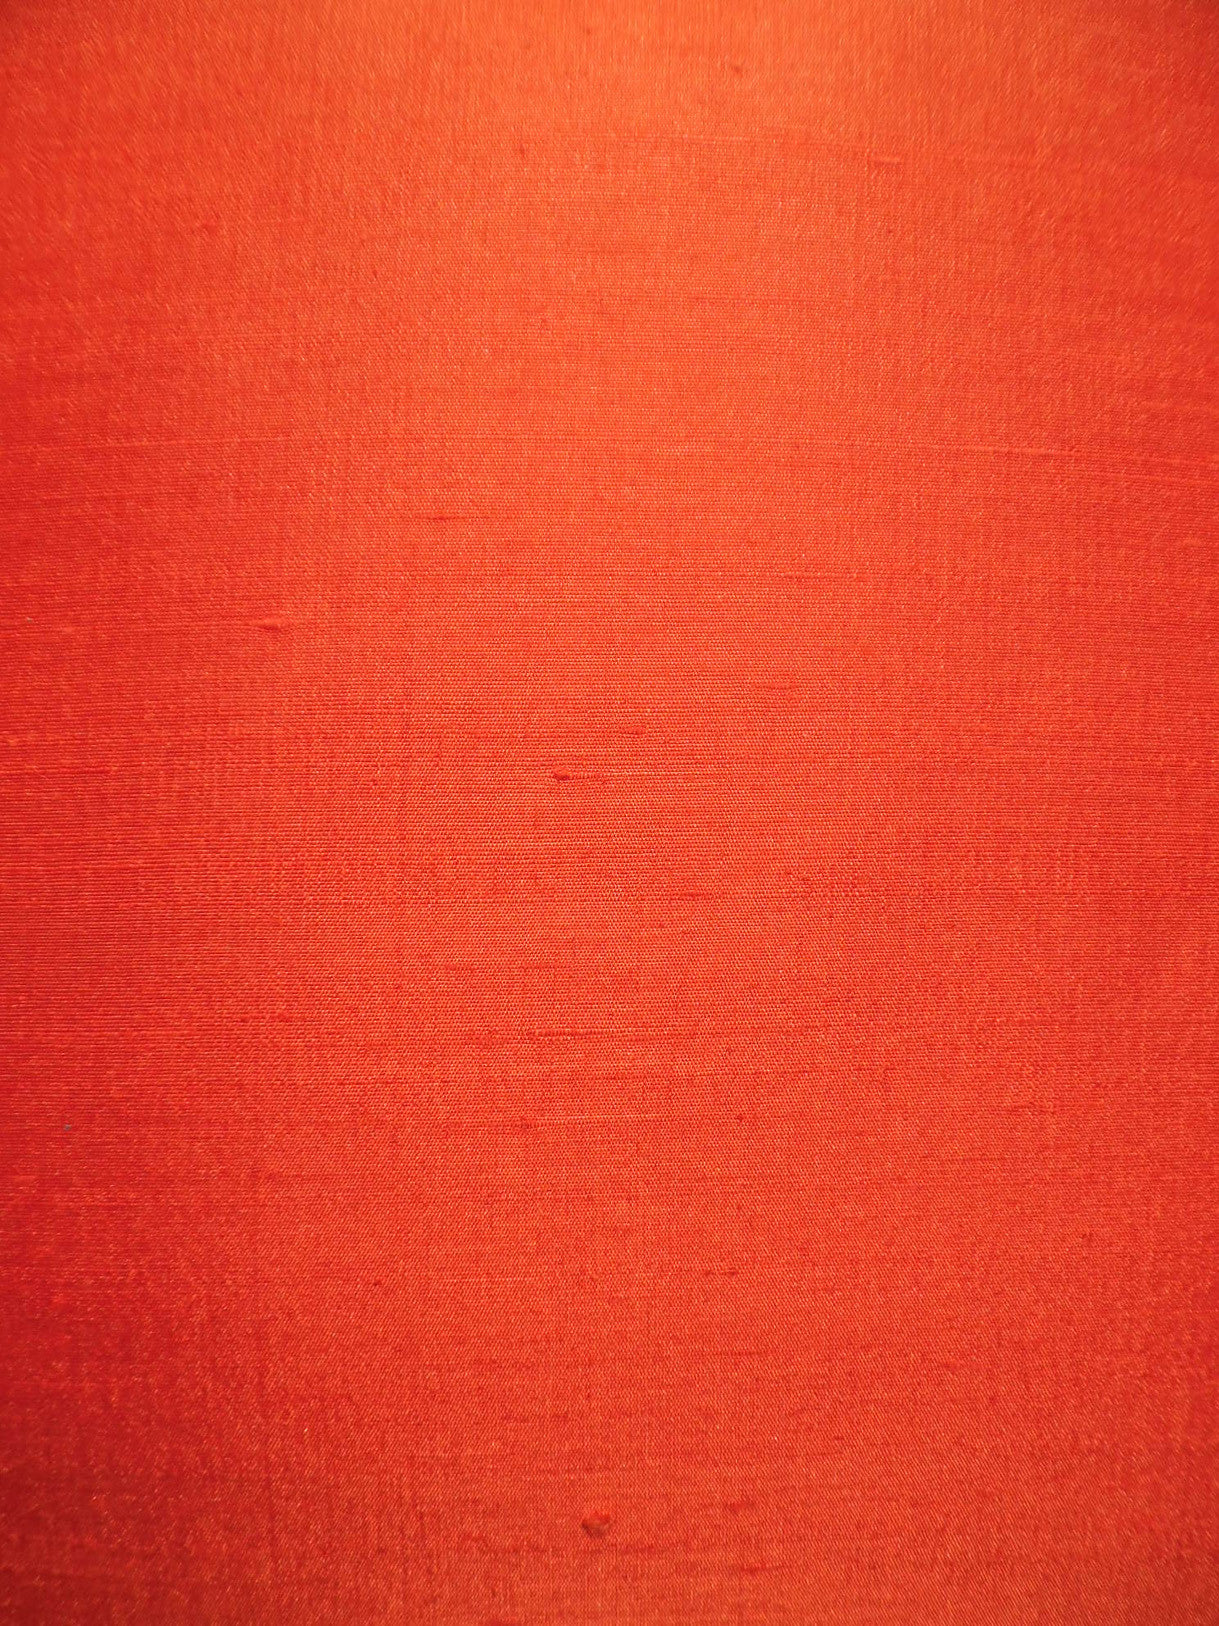 Thai Silk Solid Pillow Hot Orange